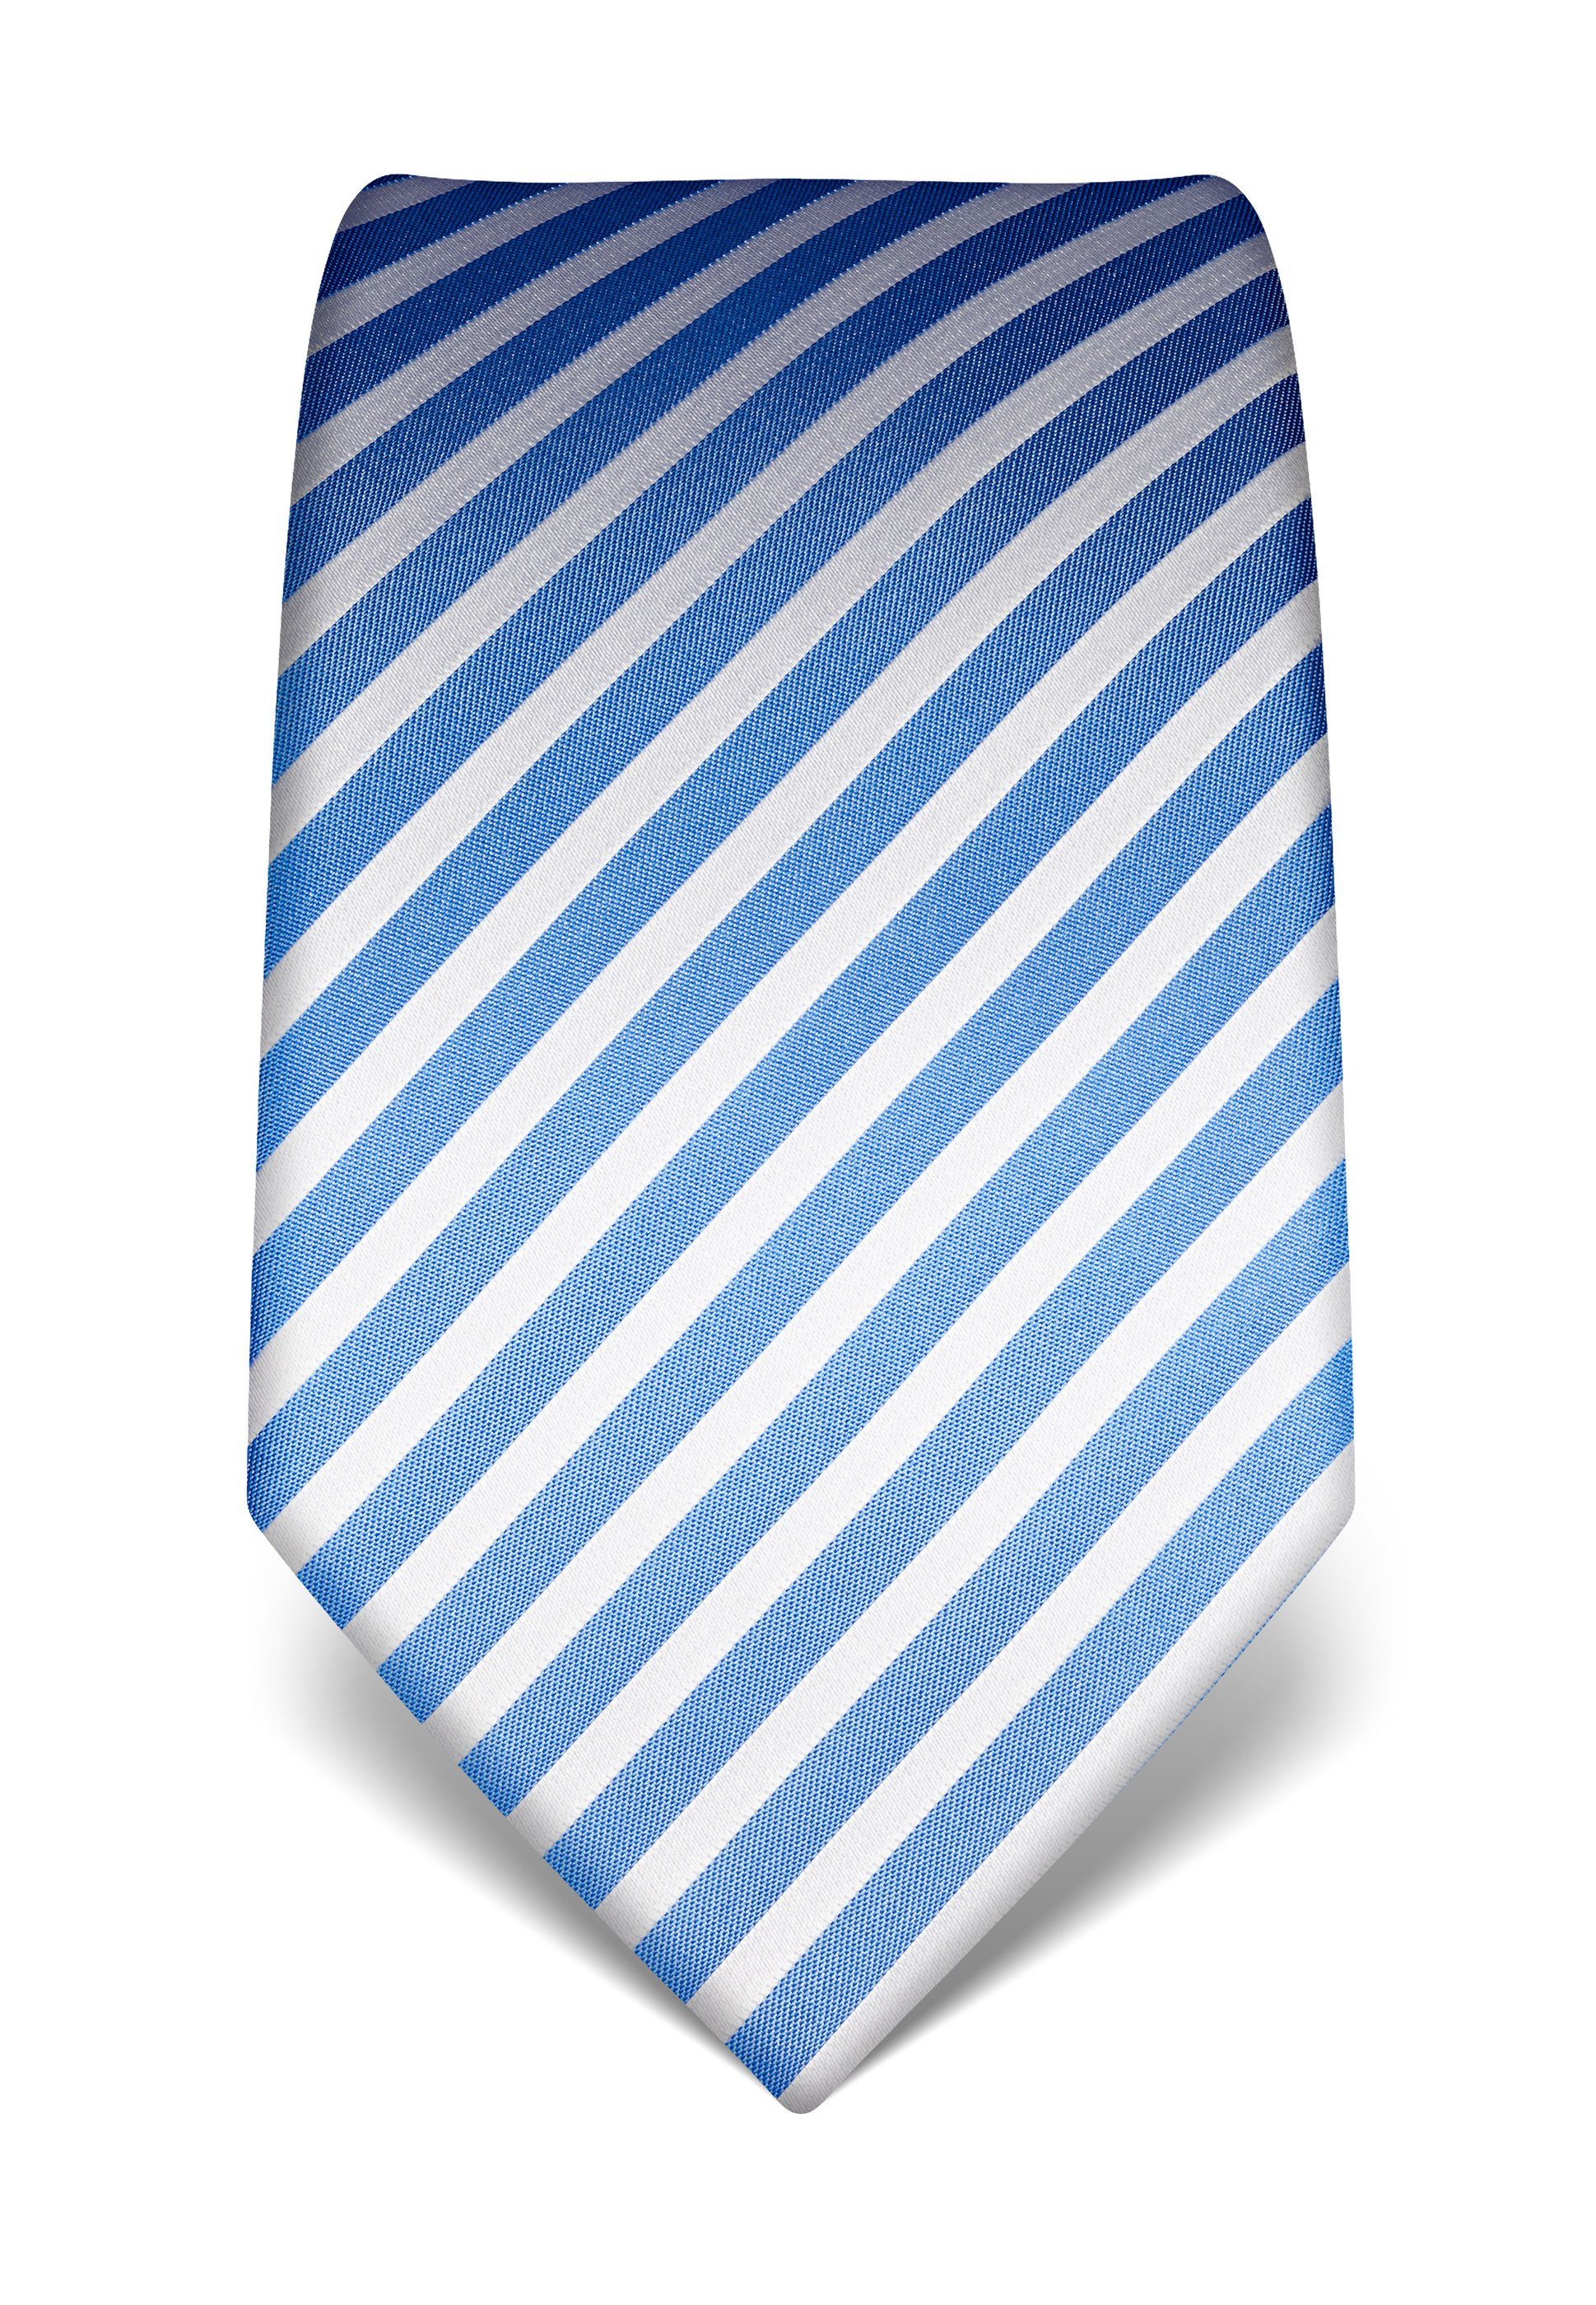 Krawatte blau/weiß gestreift Vincenzo Boretti